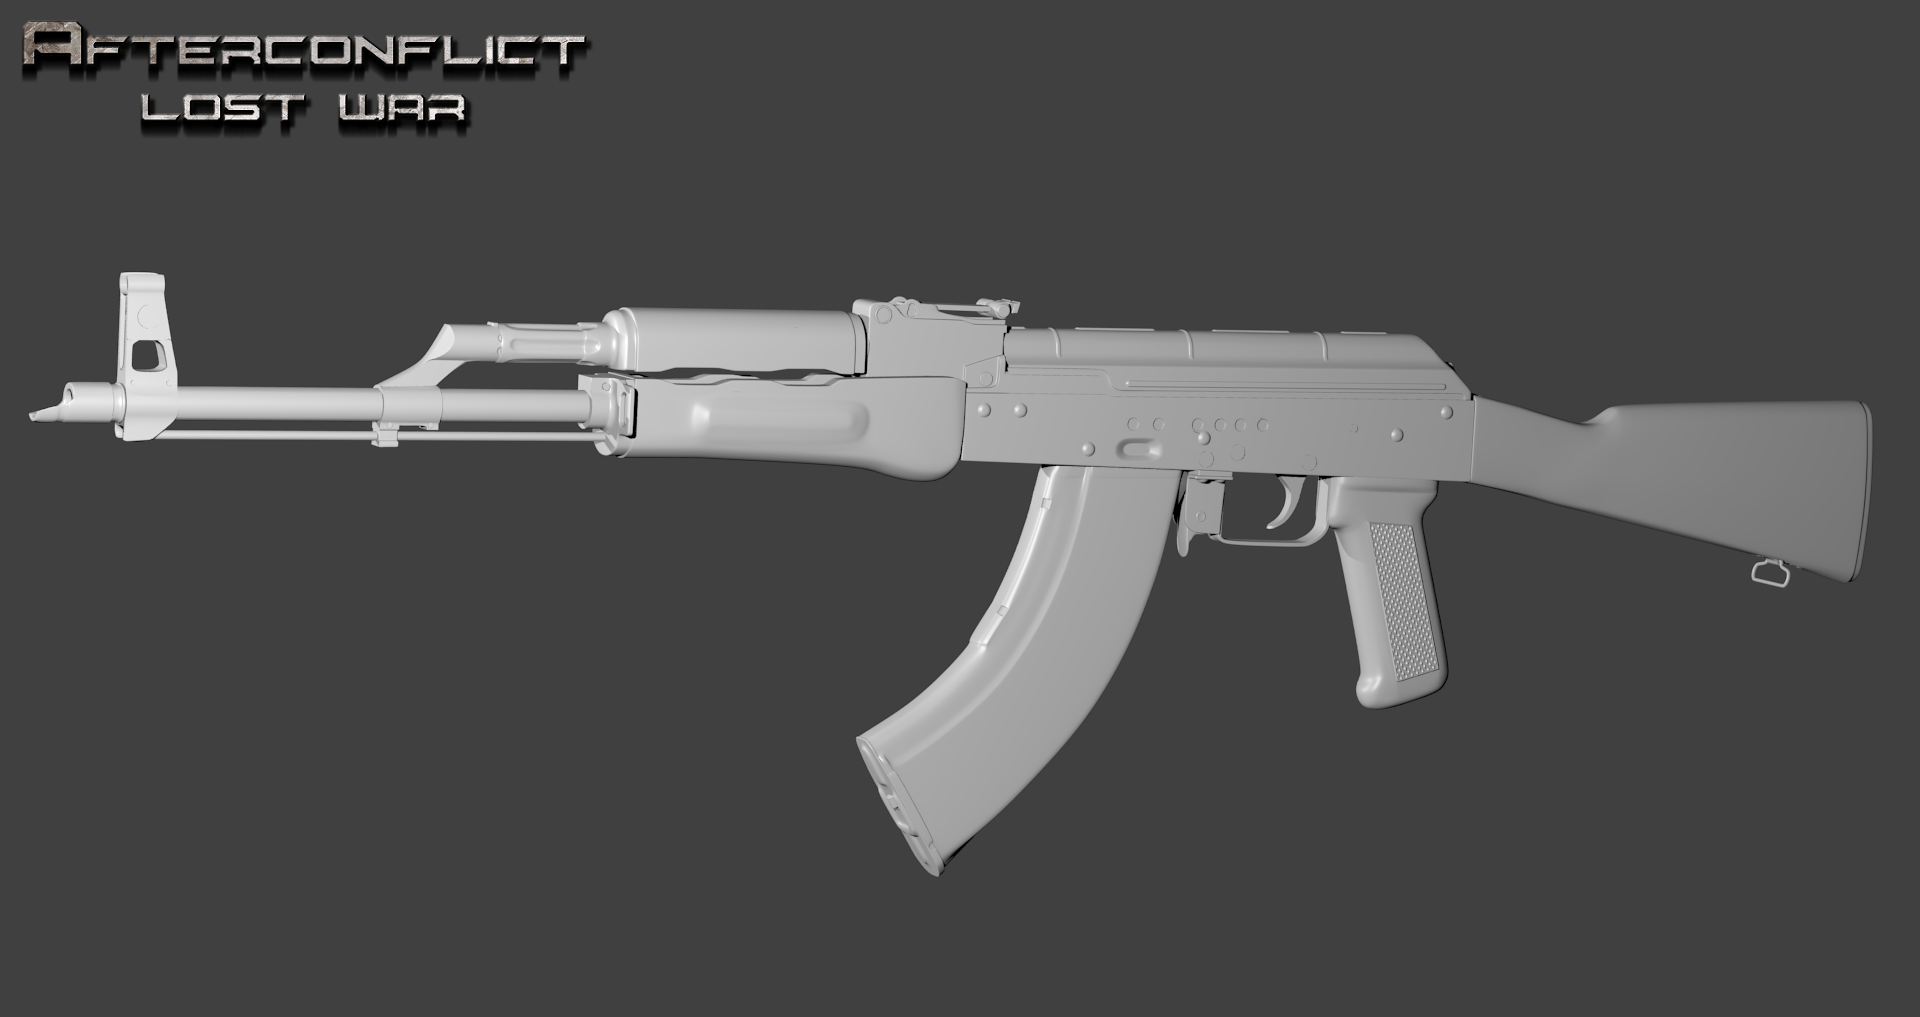 Kalashnikov AKM 7.62x39 assault rifle - The Official Escape from